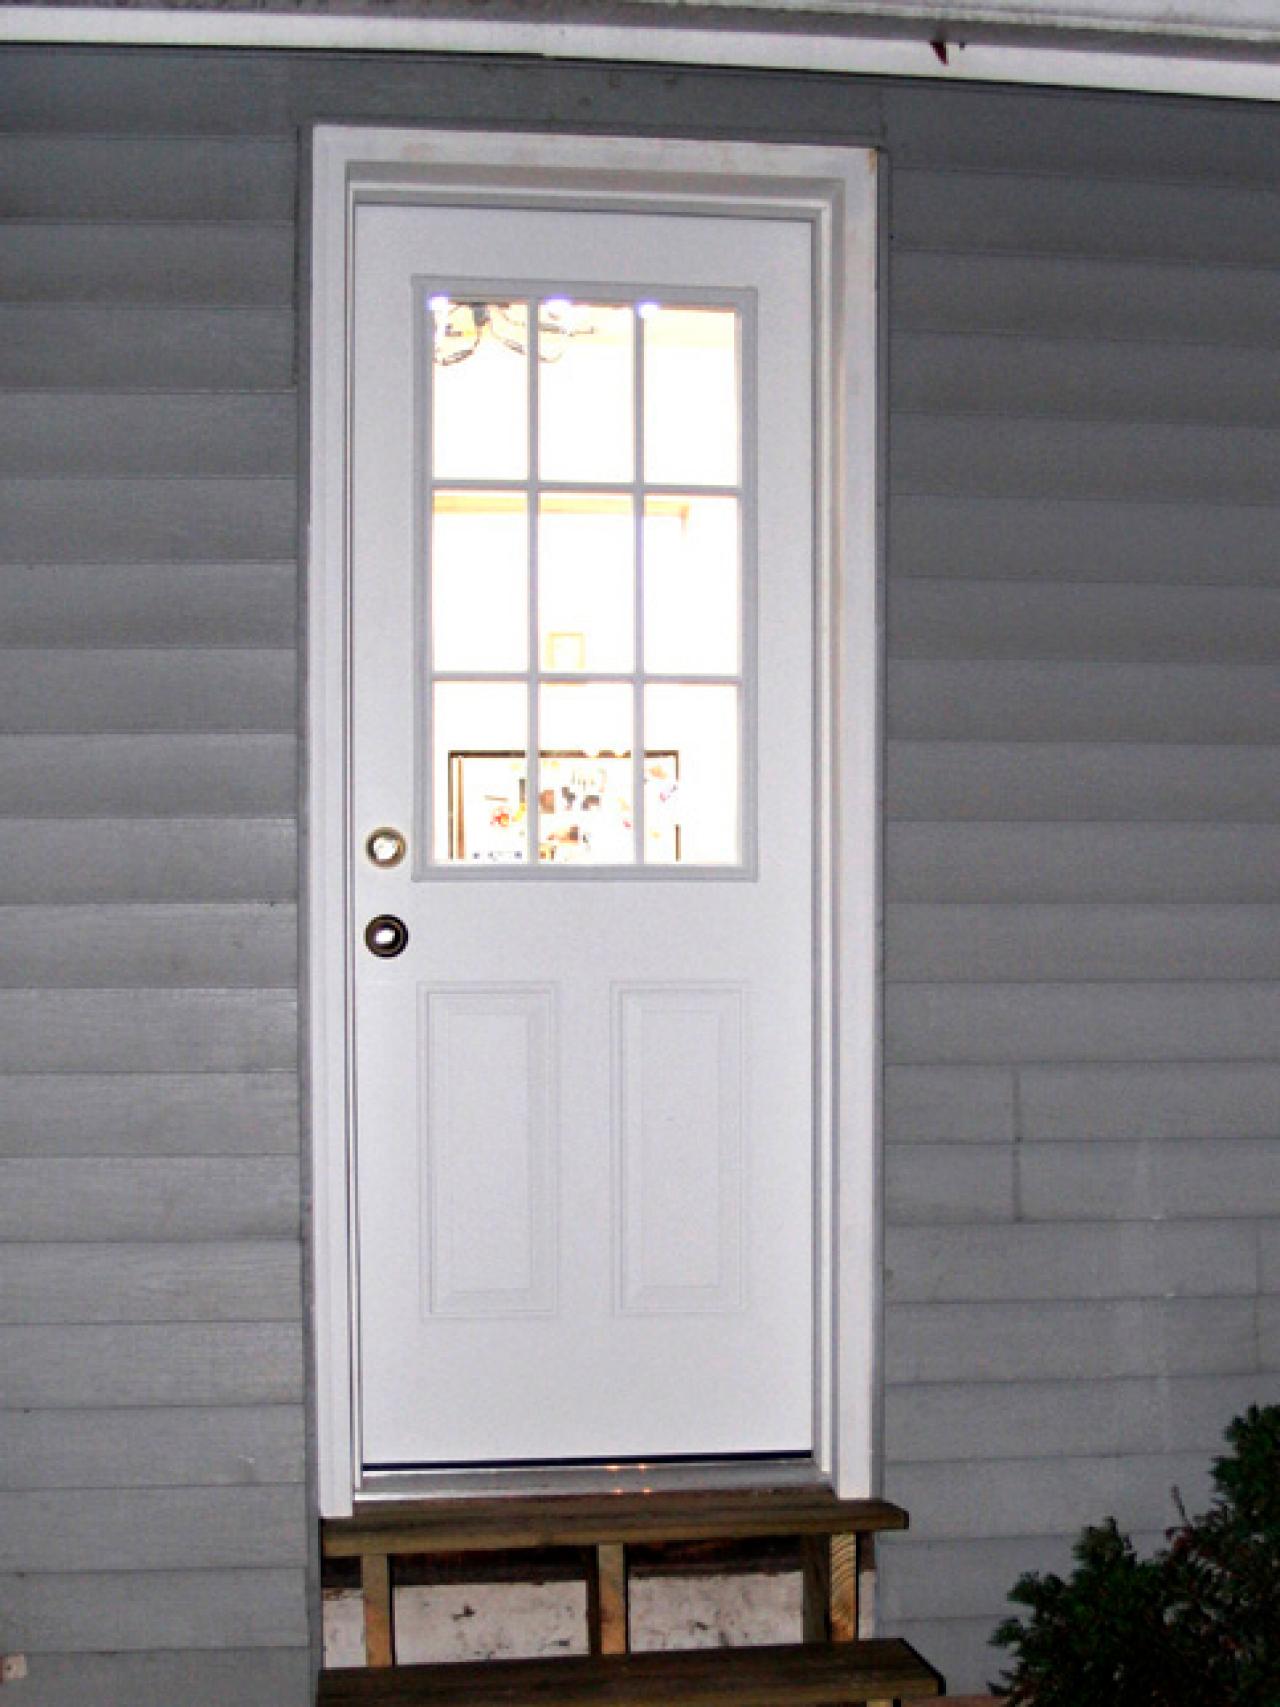 Expanding a Window to a Door | HGTV